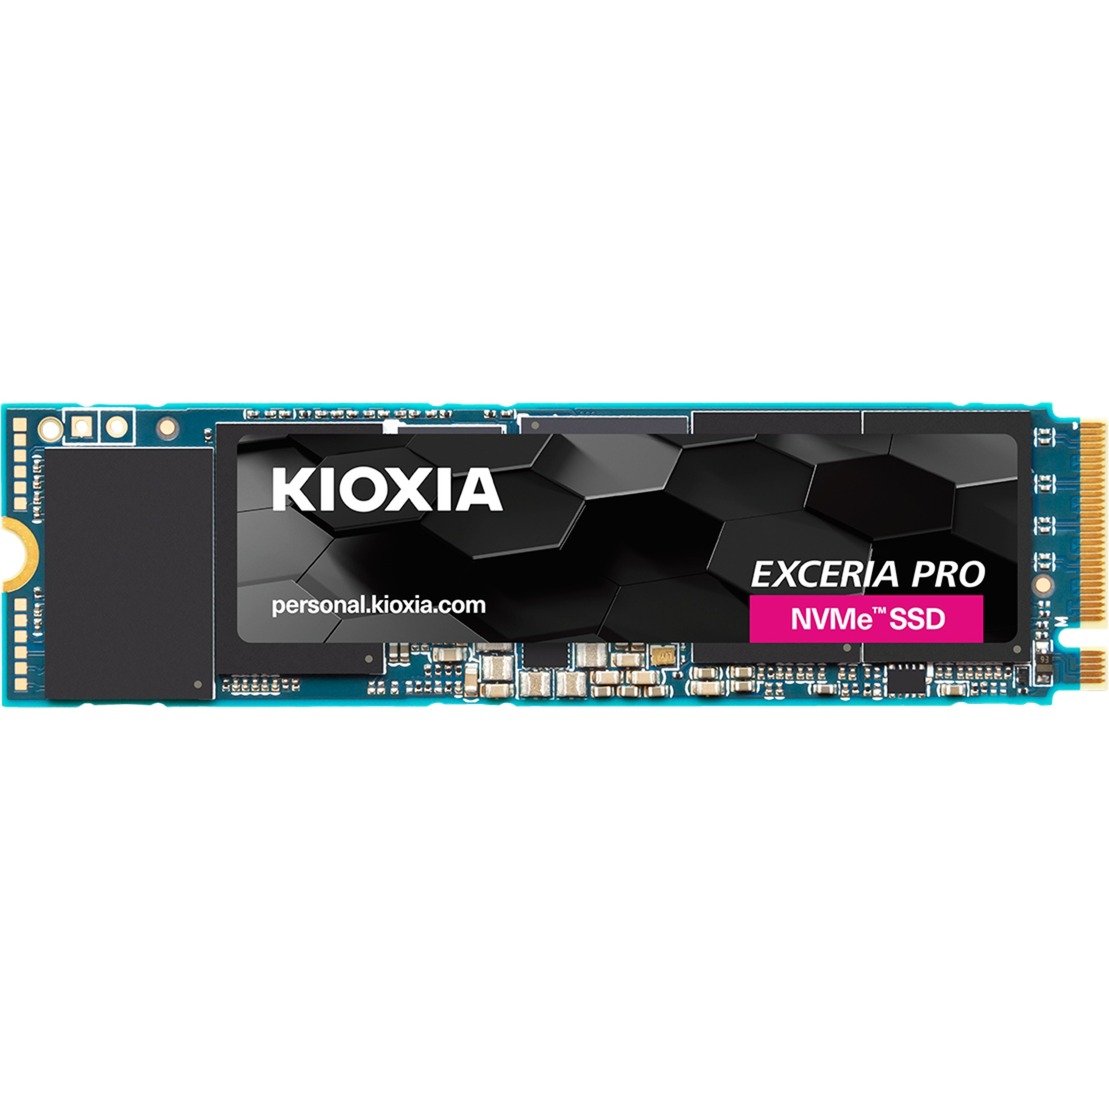 Exceria Pro 1 TB, SSD von Kioxia